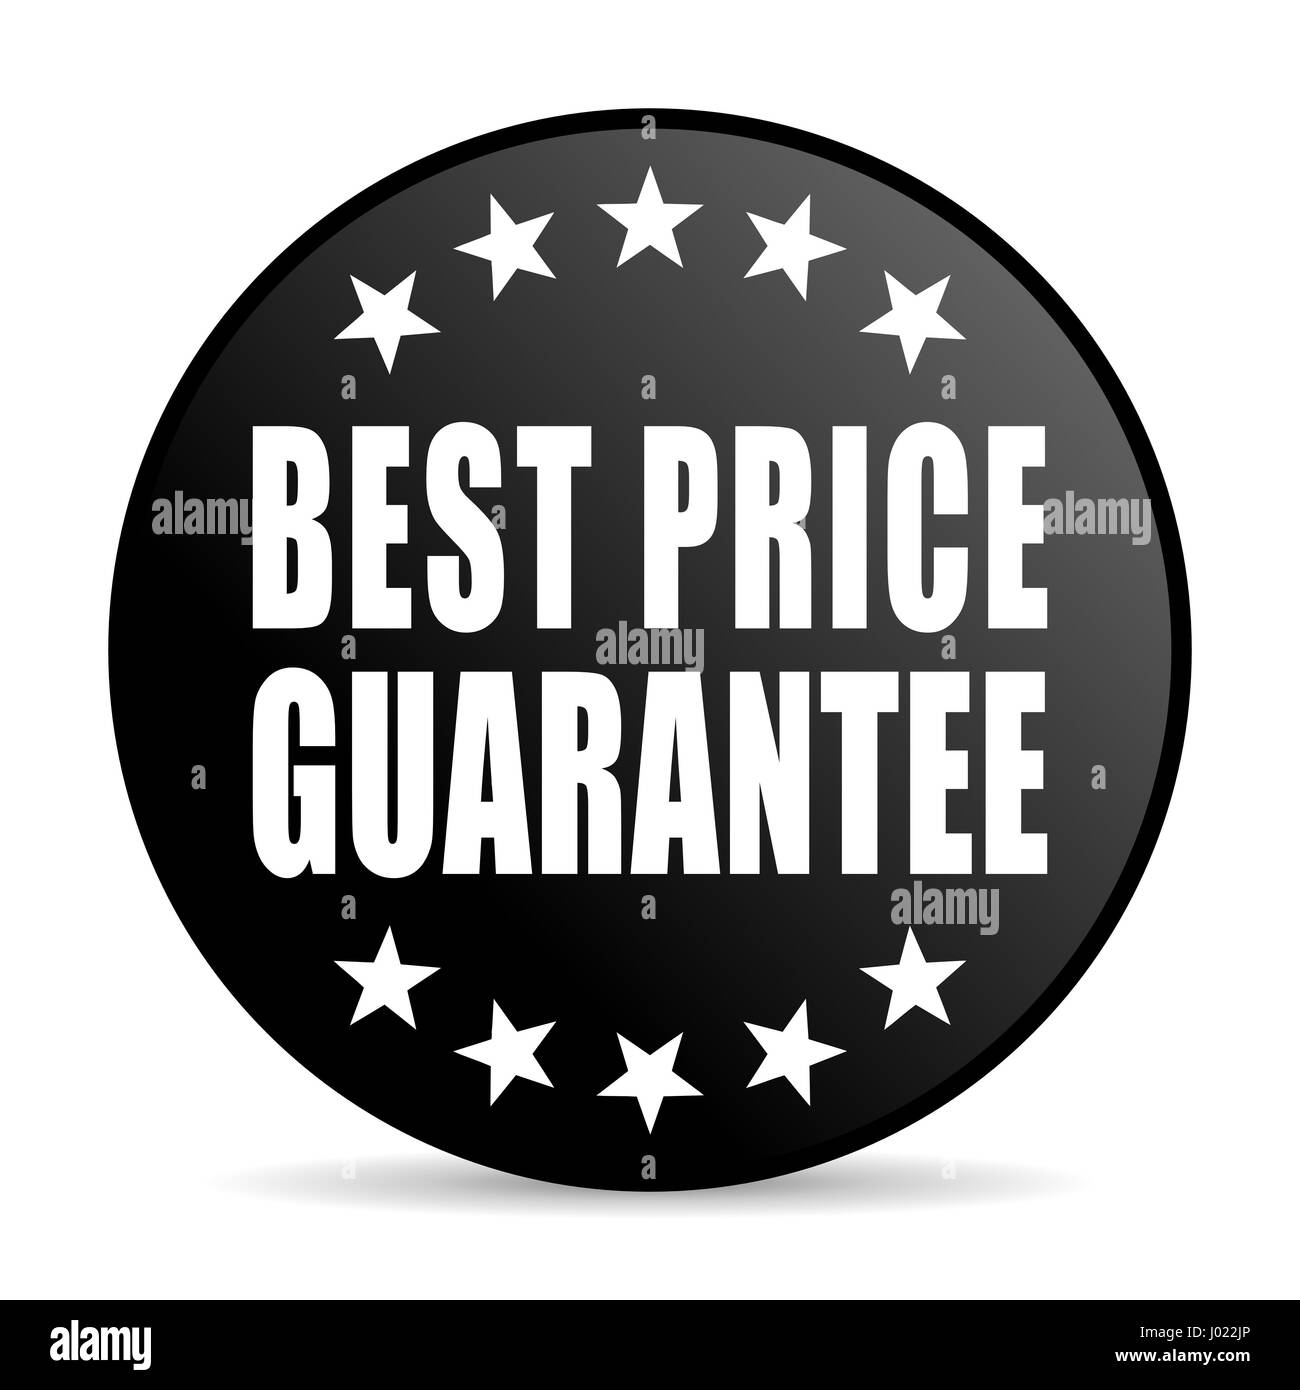 Best price guarantee black color web design round internet icon on white background. Stock Photo